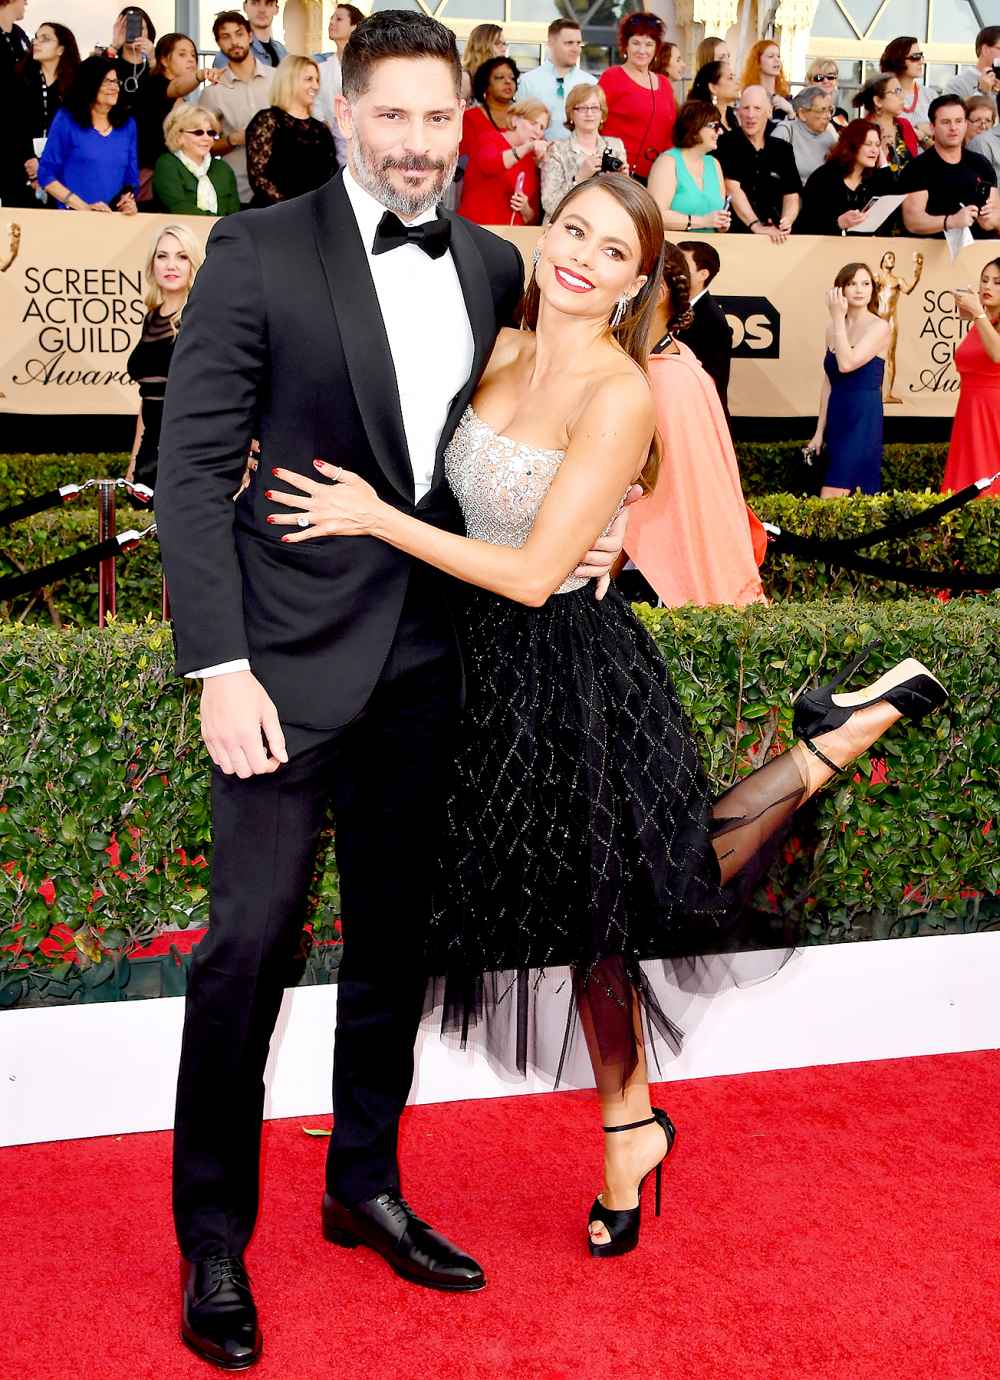 Joe Manganiello and Sofia Vergara attend the 23rd Annual Screen Actors Guild Awards.